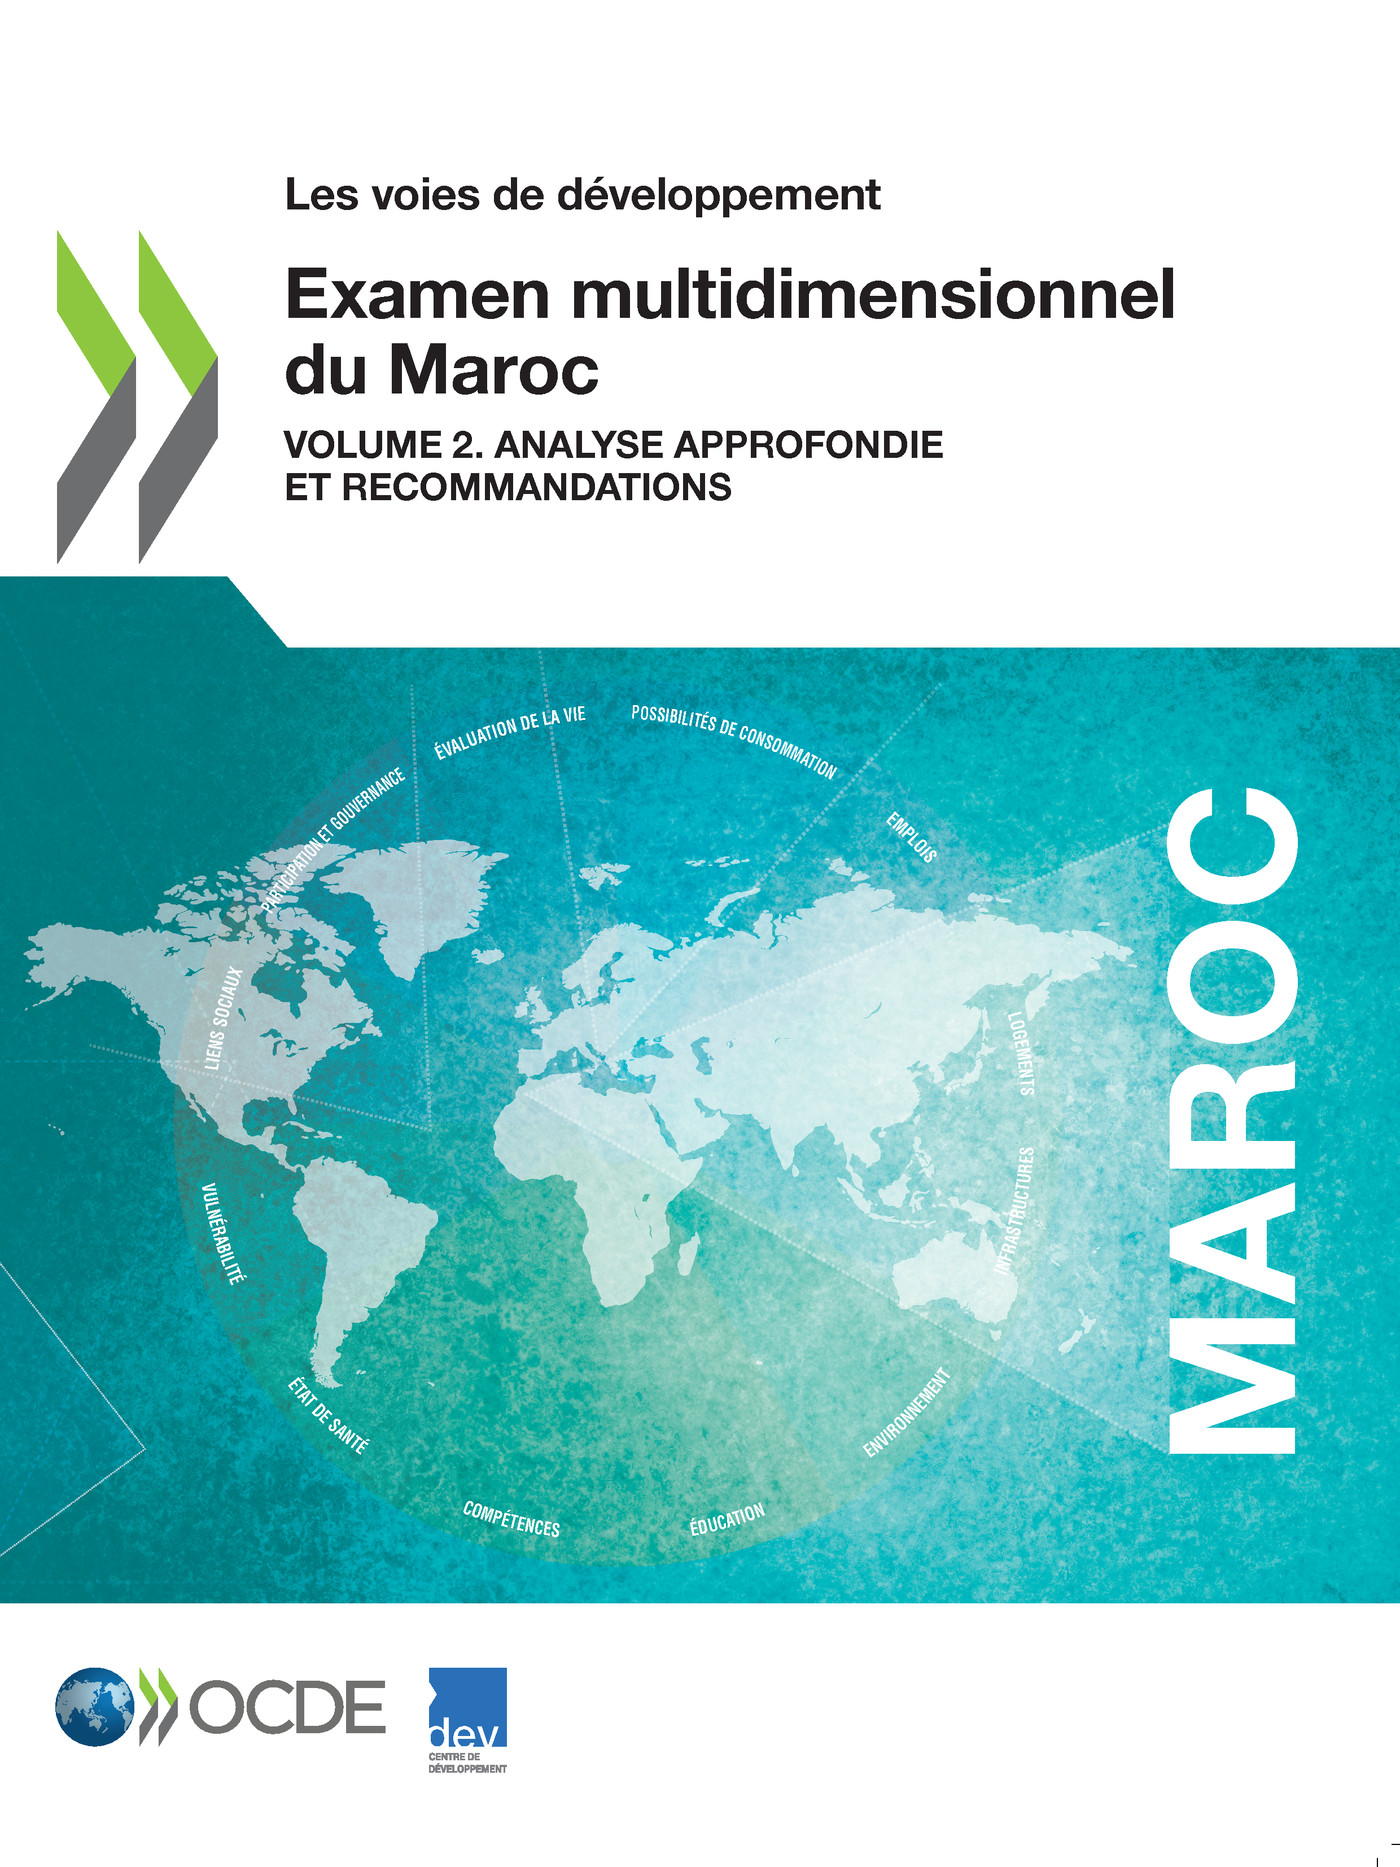 Examen multidimensionnel du Maroc (Volume 2) -  Collectif - OCDE / OECD